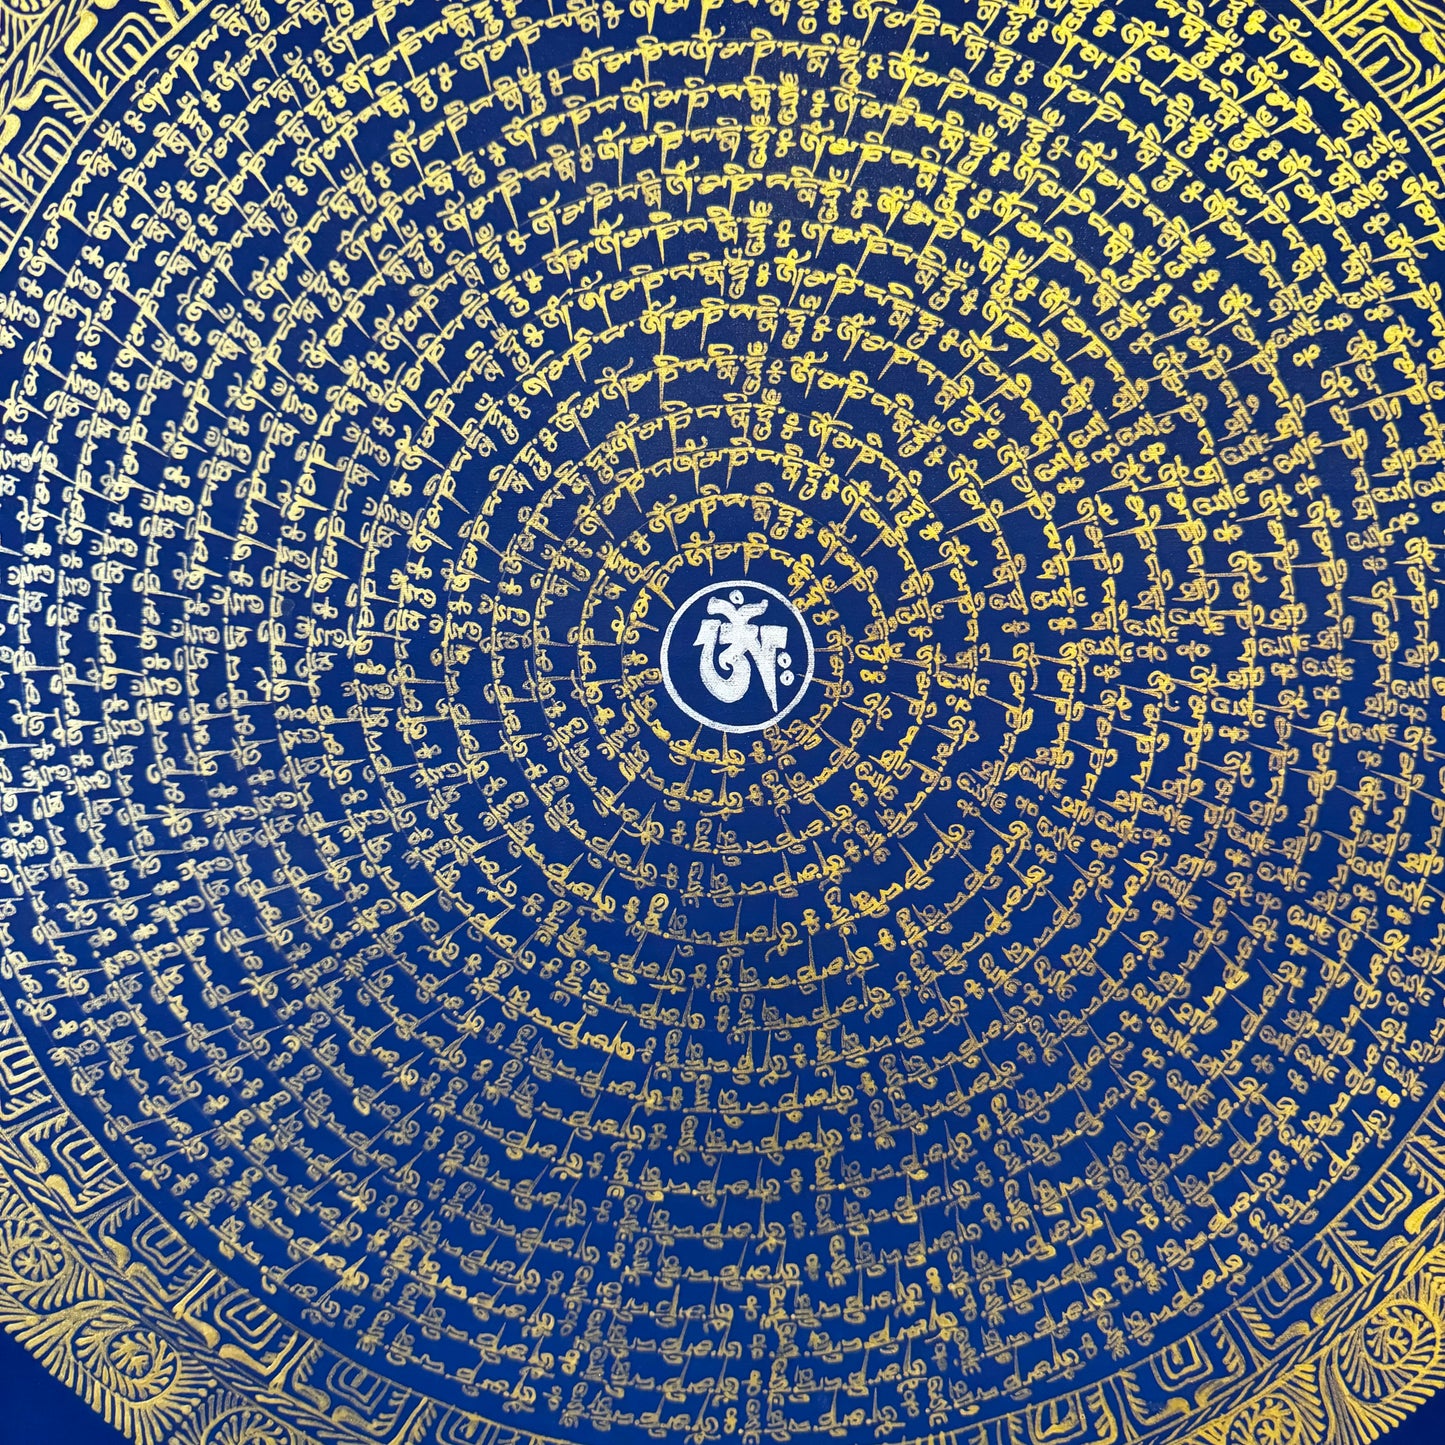 Beautiful Mantra Mandala with Blue Background